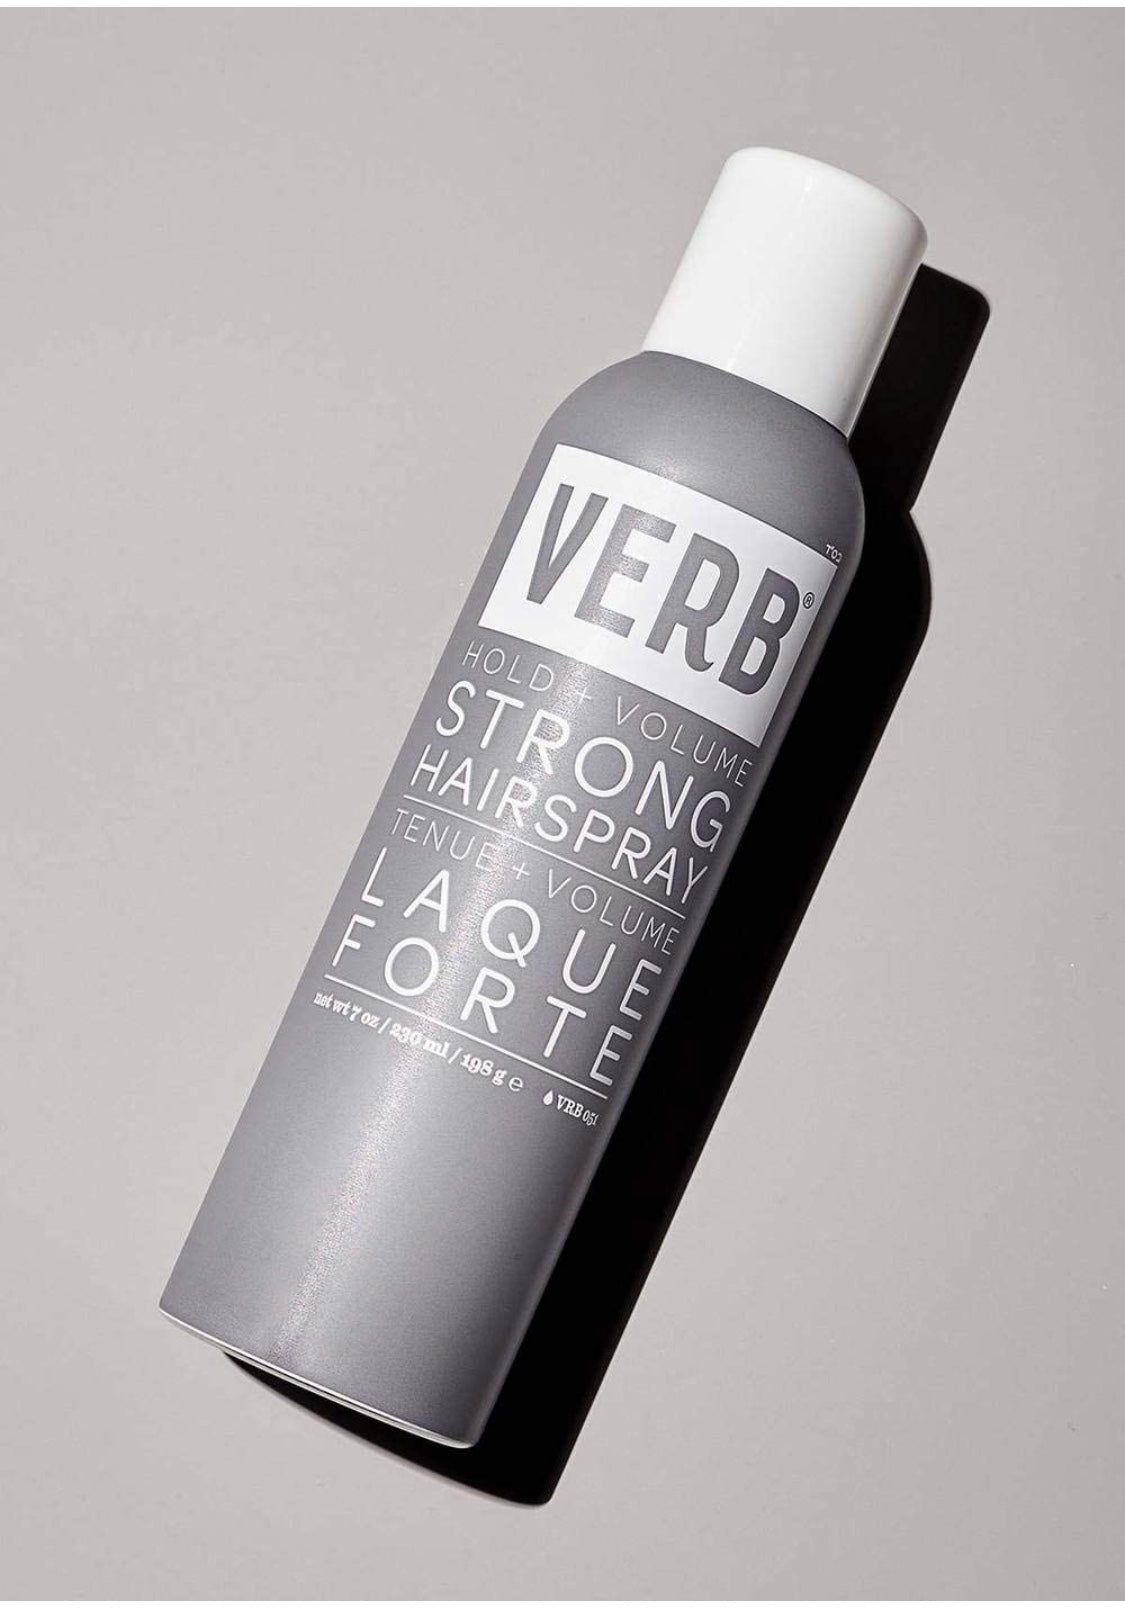 Verb - Strong hairspray 7 fl. oz./ 230 ml